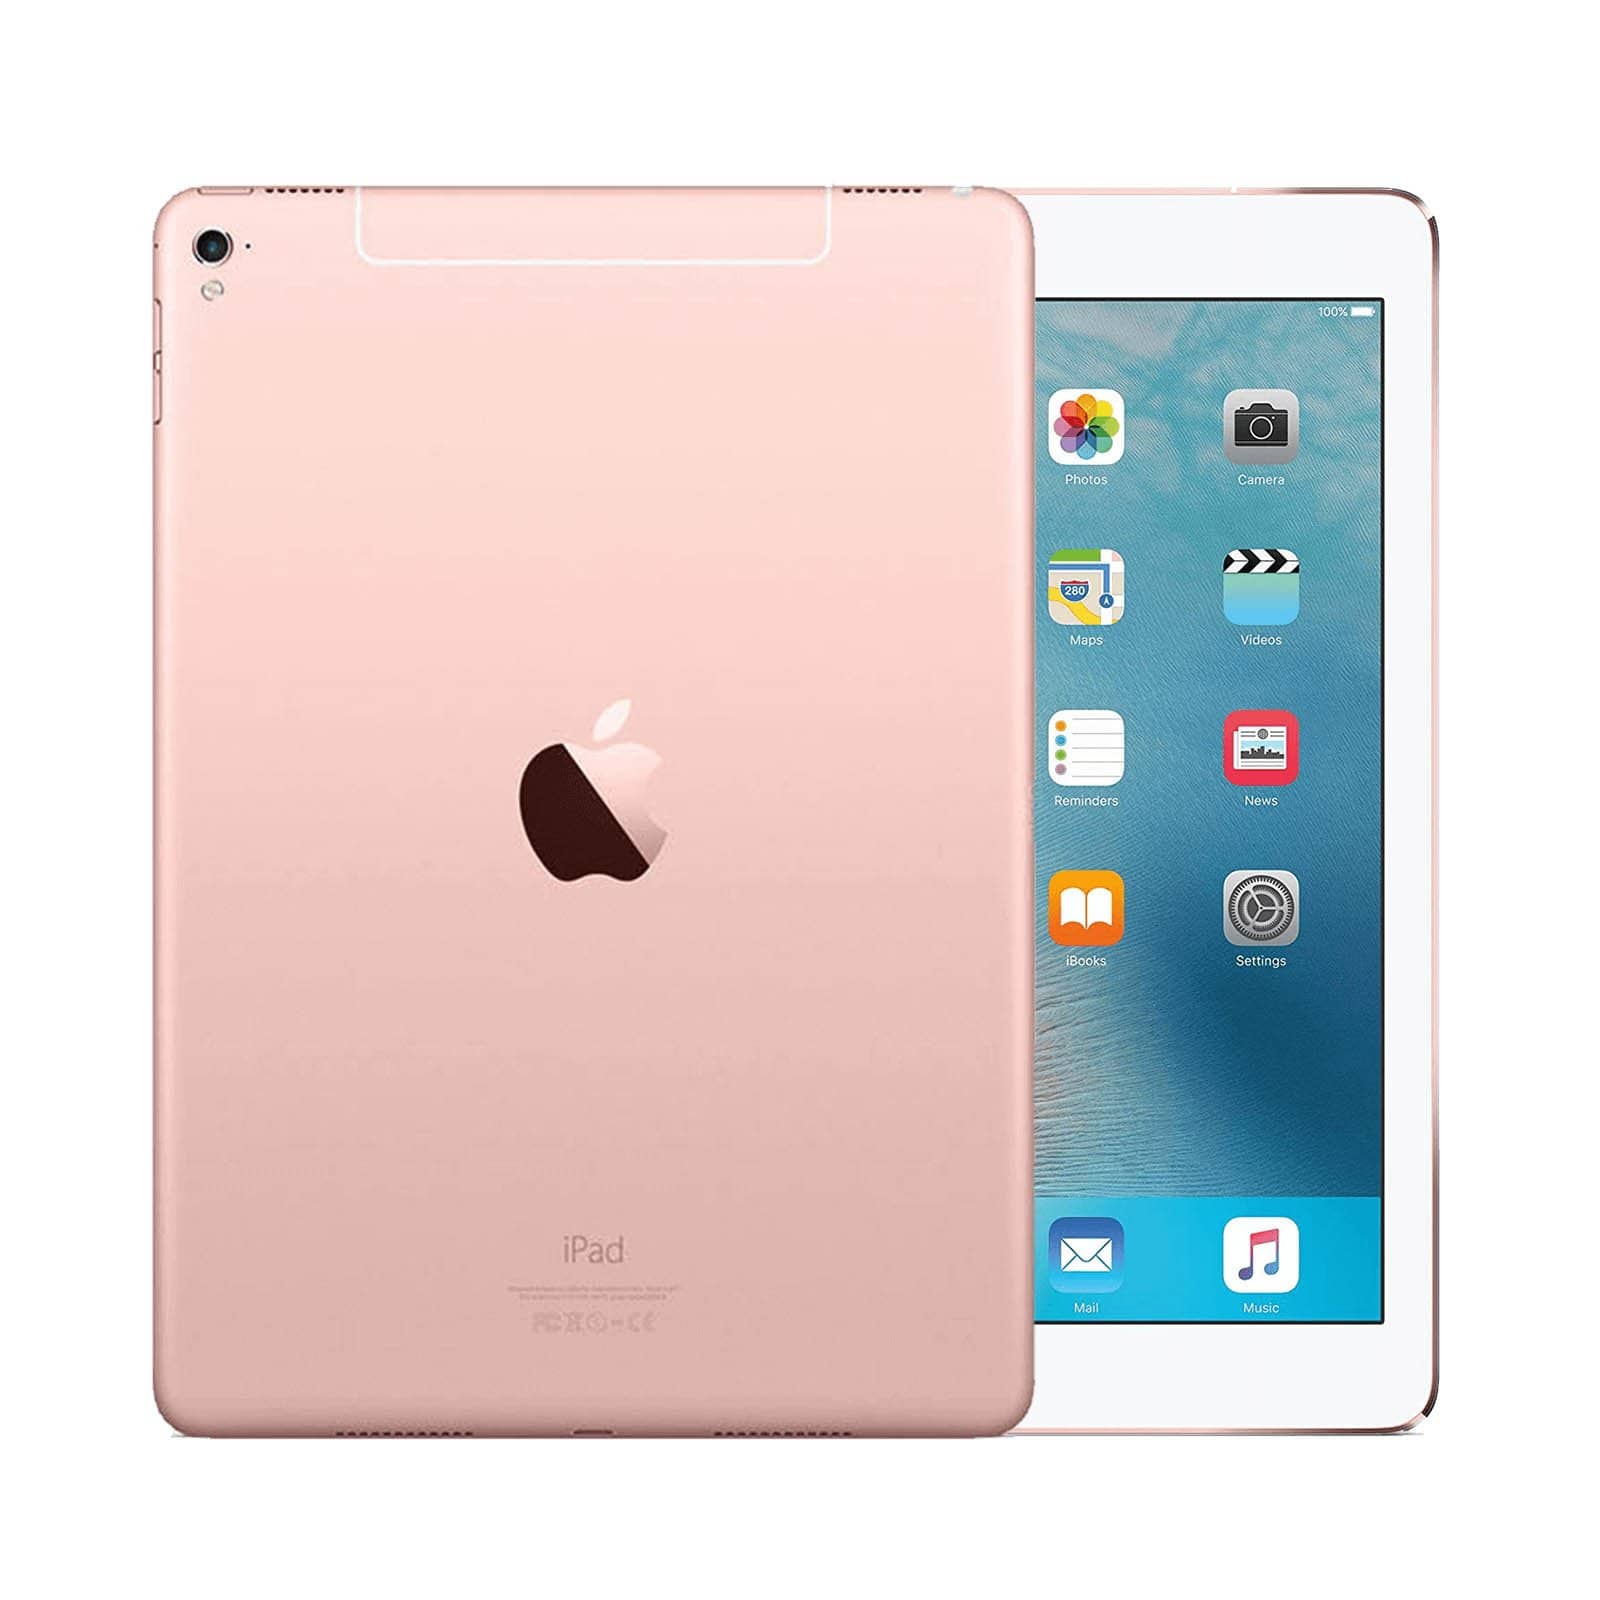 iPad Pro 9.7 Inch 256GB Rose Gold Good - Unlocked 256GB Rose Gold Good